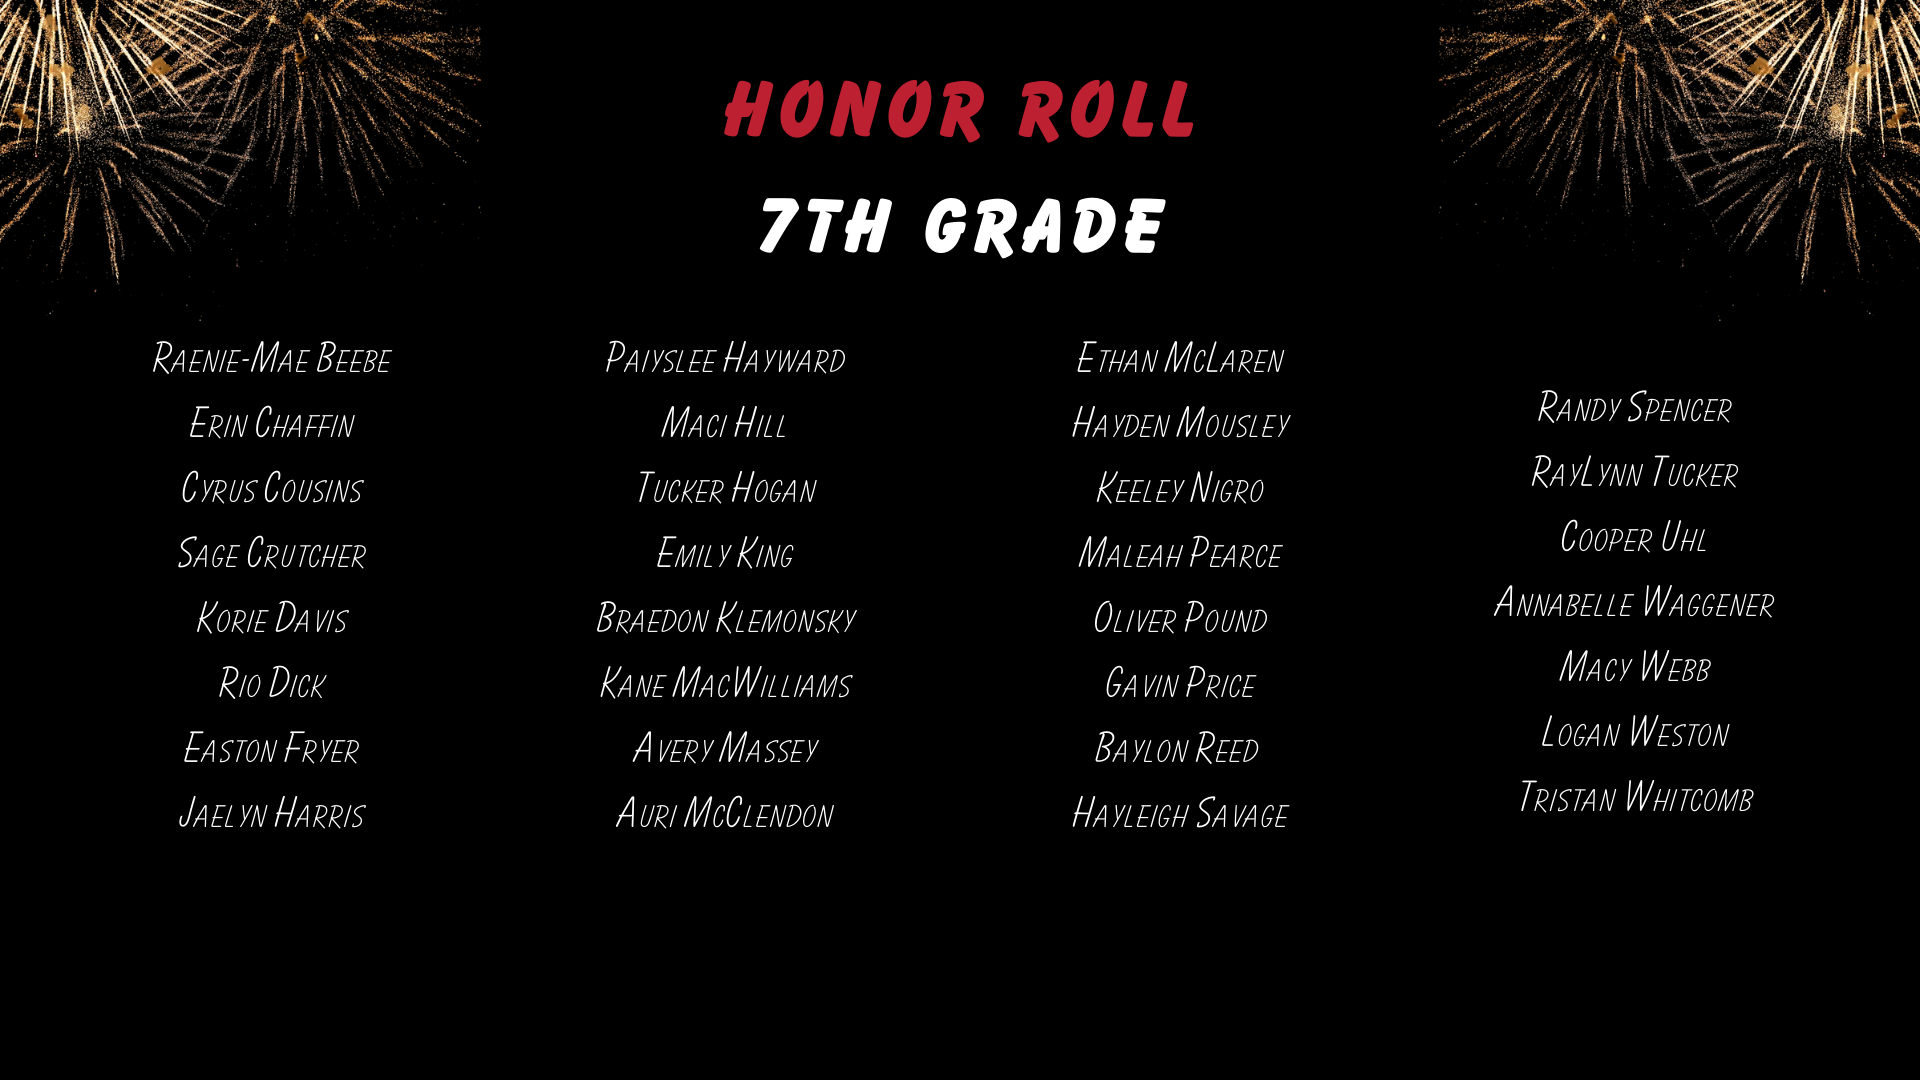 High Honor Roll 7th grade